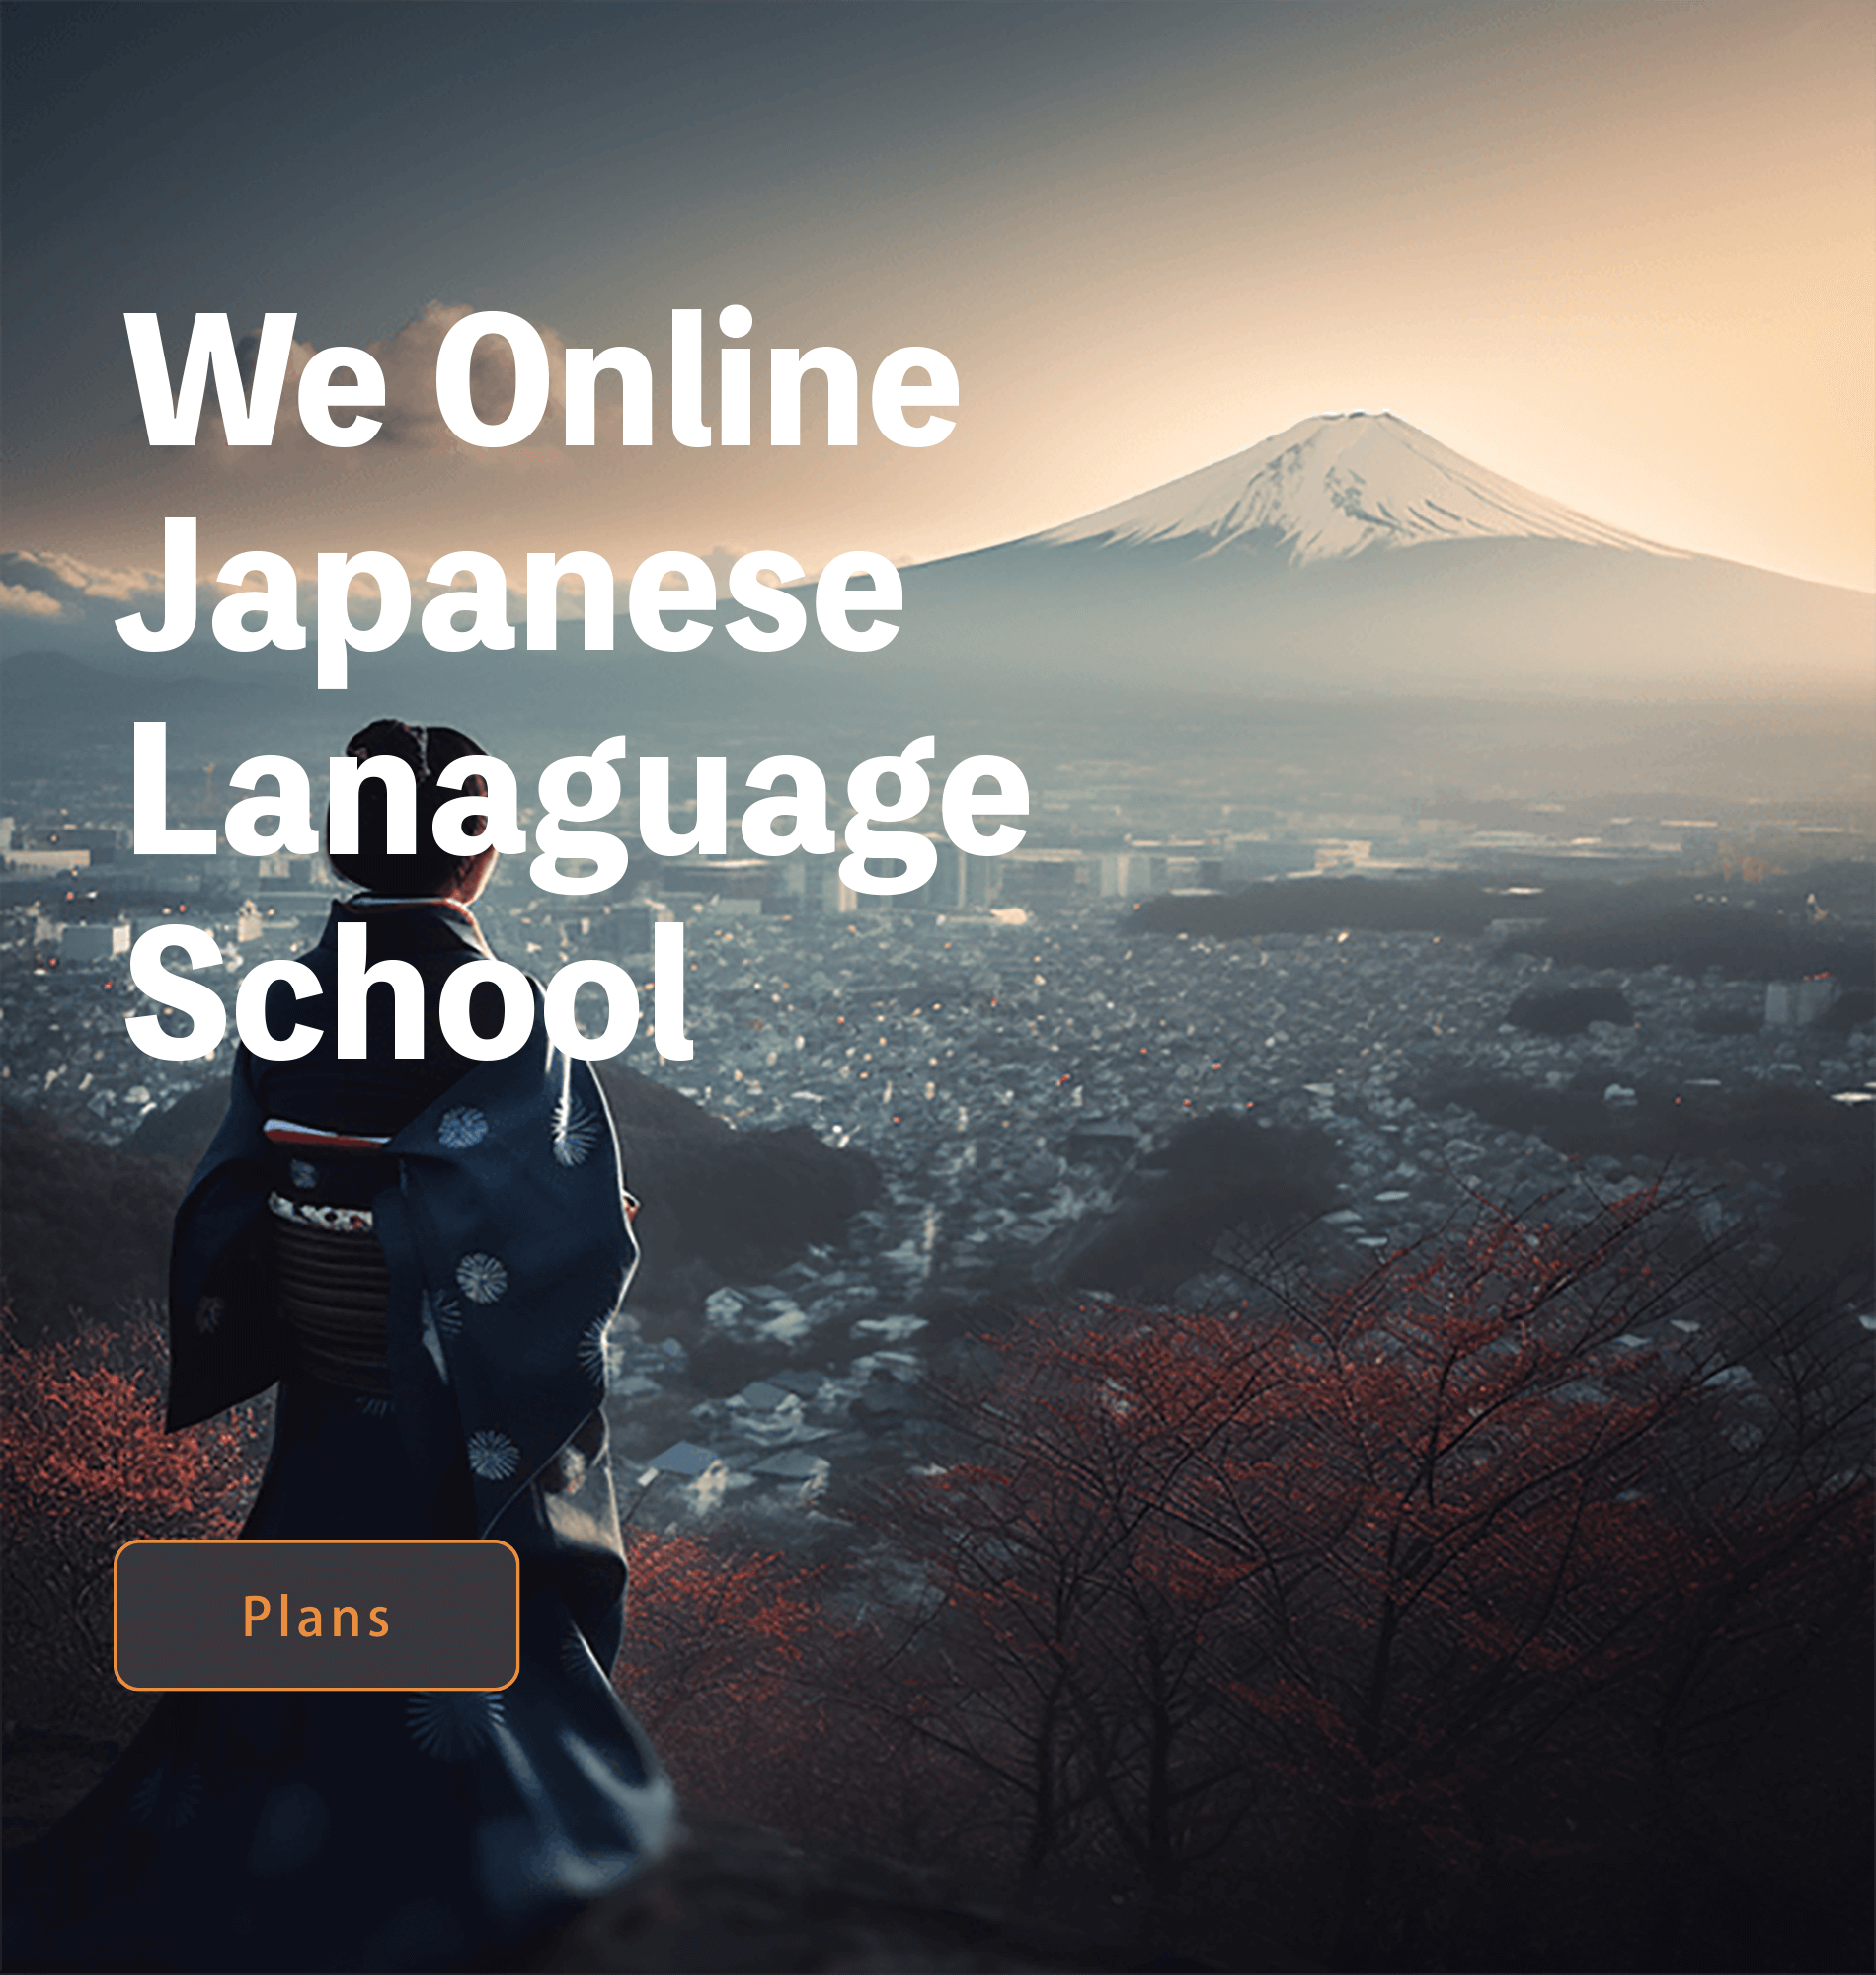 Online Japanese Language School, We